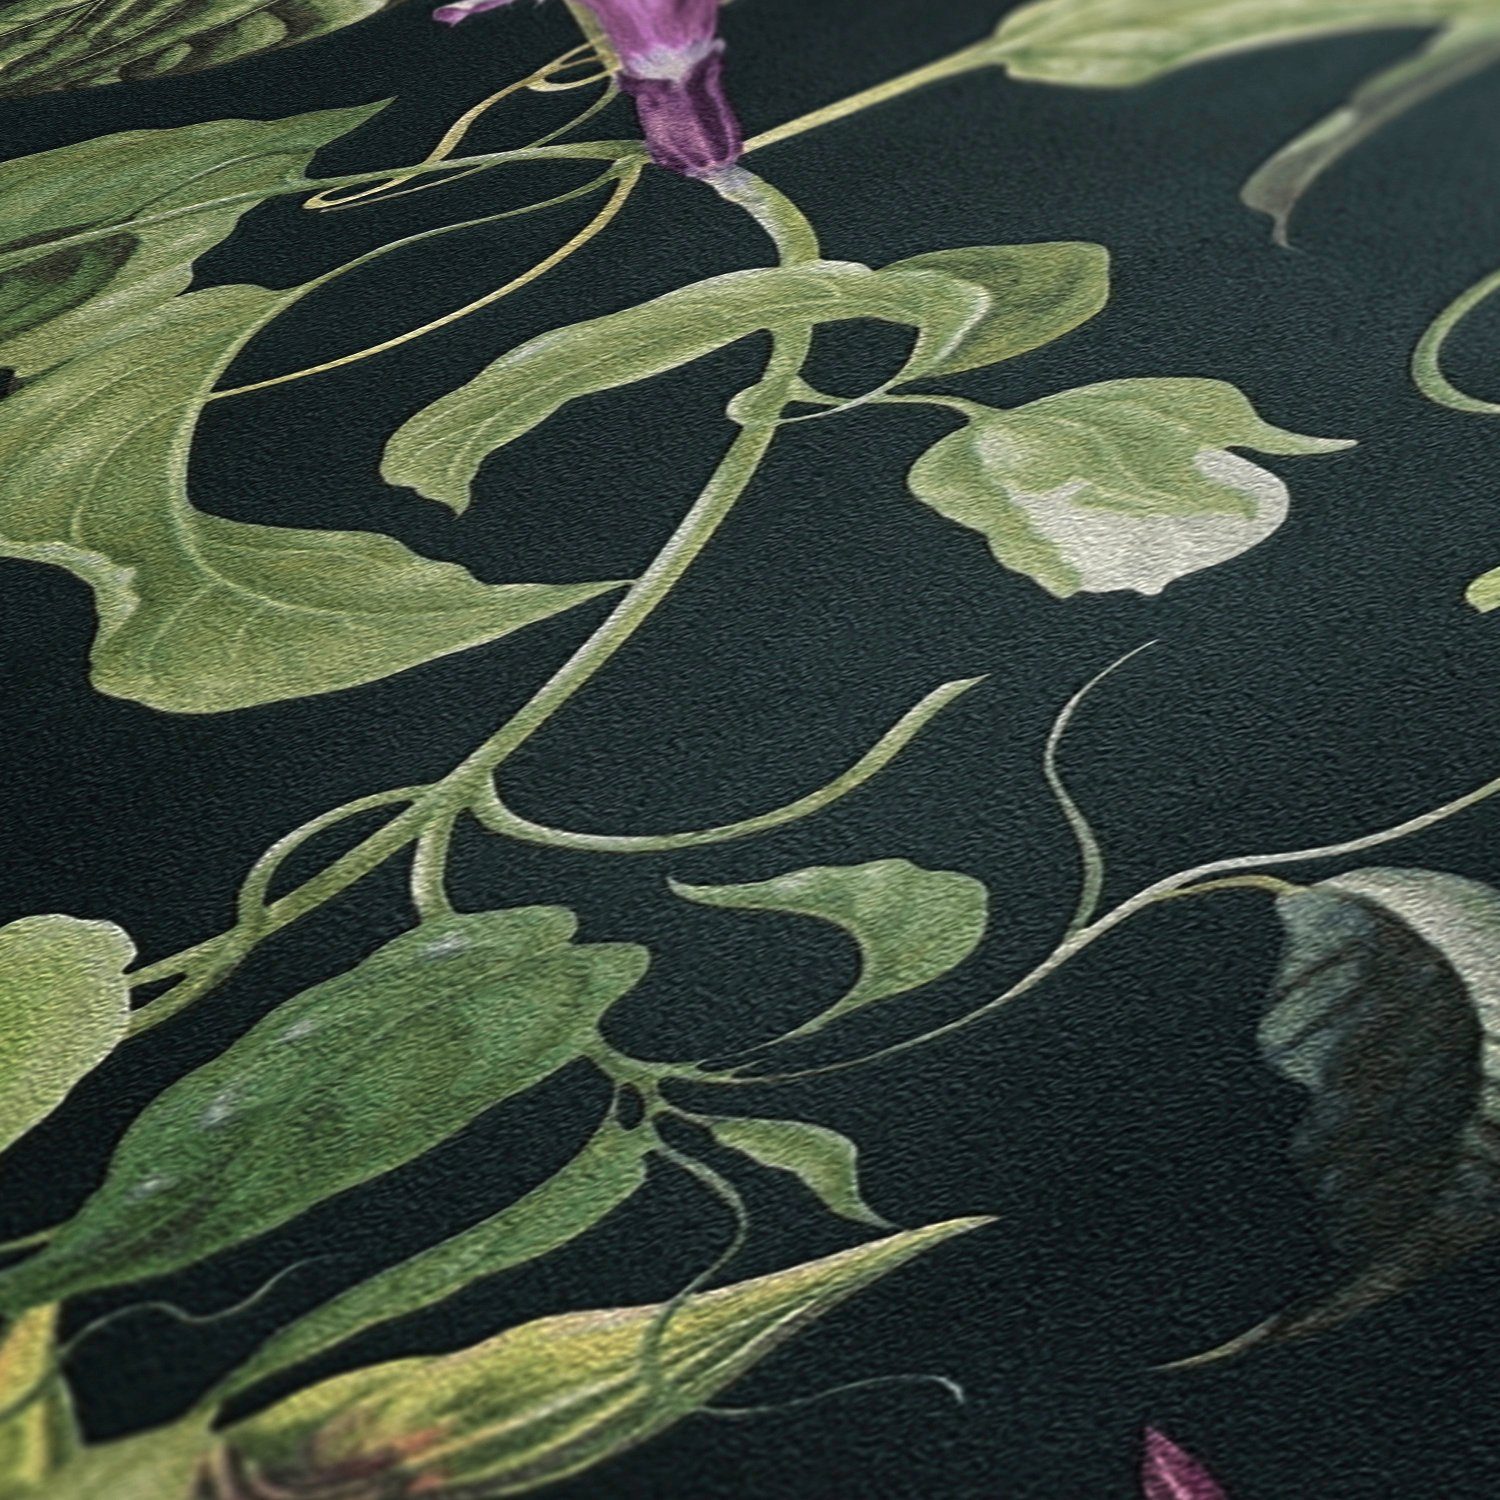 LIVING botanisch, METROPOLIS BY Tapete floral, schwarz/grün/lila Dschungel good, tropisch, MICHALSKY Designertapete A.S. Vliestapete Change Création is